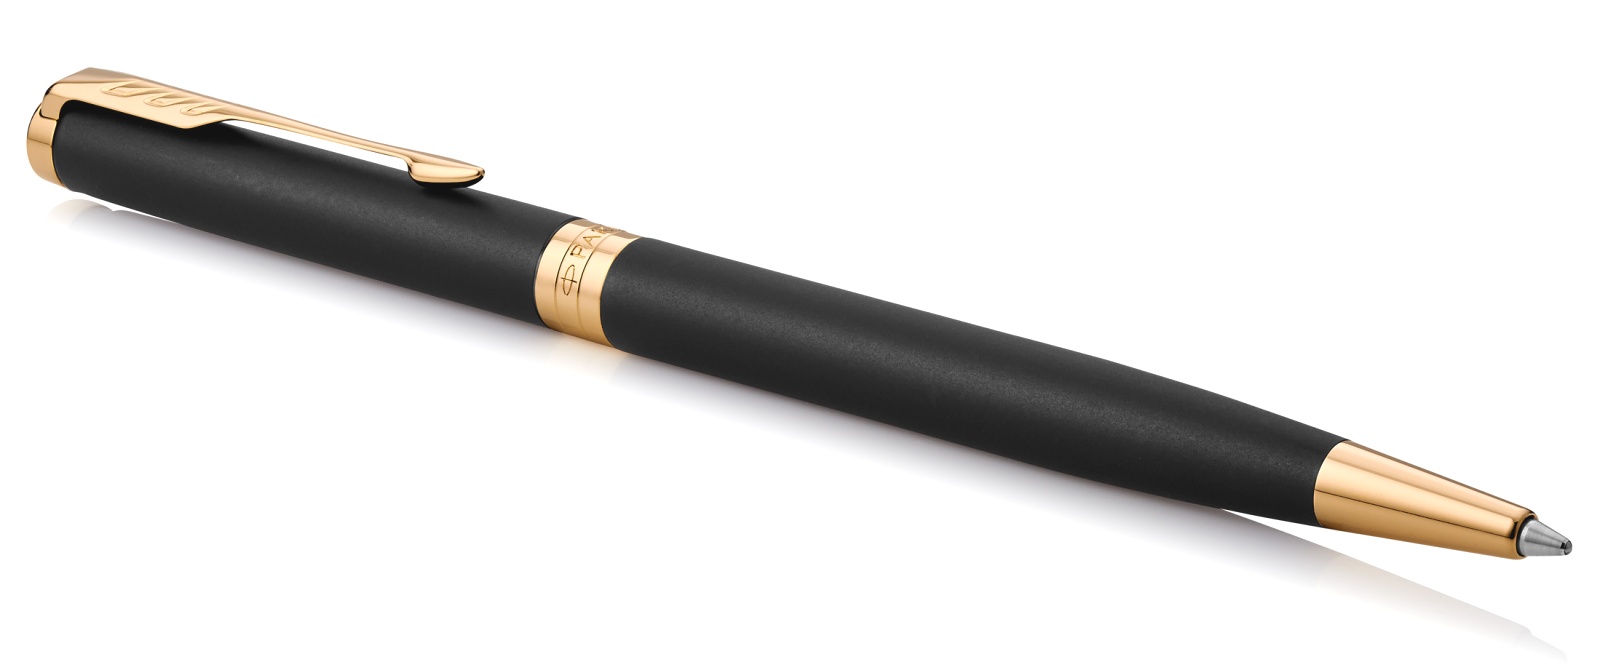  Шариковая ручка Parker Sonnet Slim Core K428, Matte Black GT, фото 2